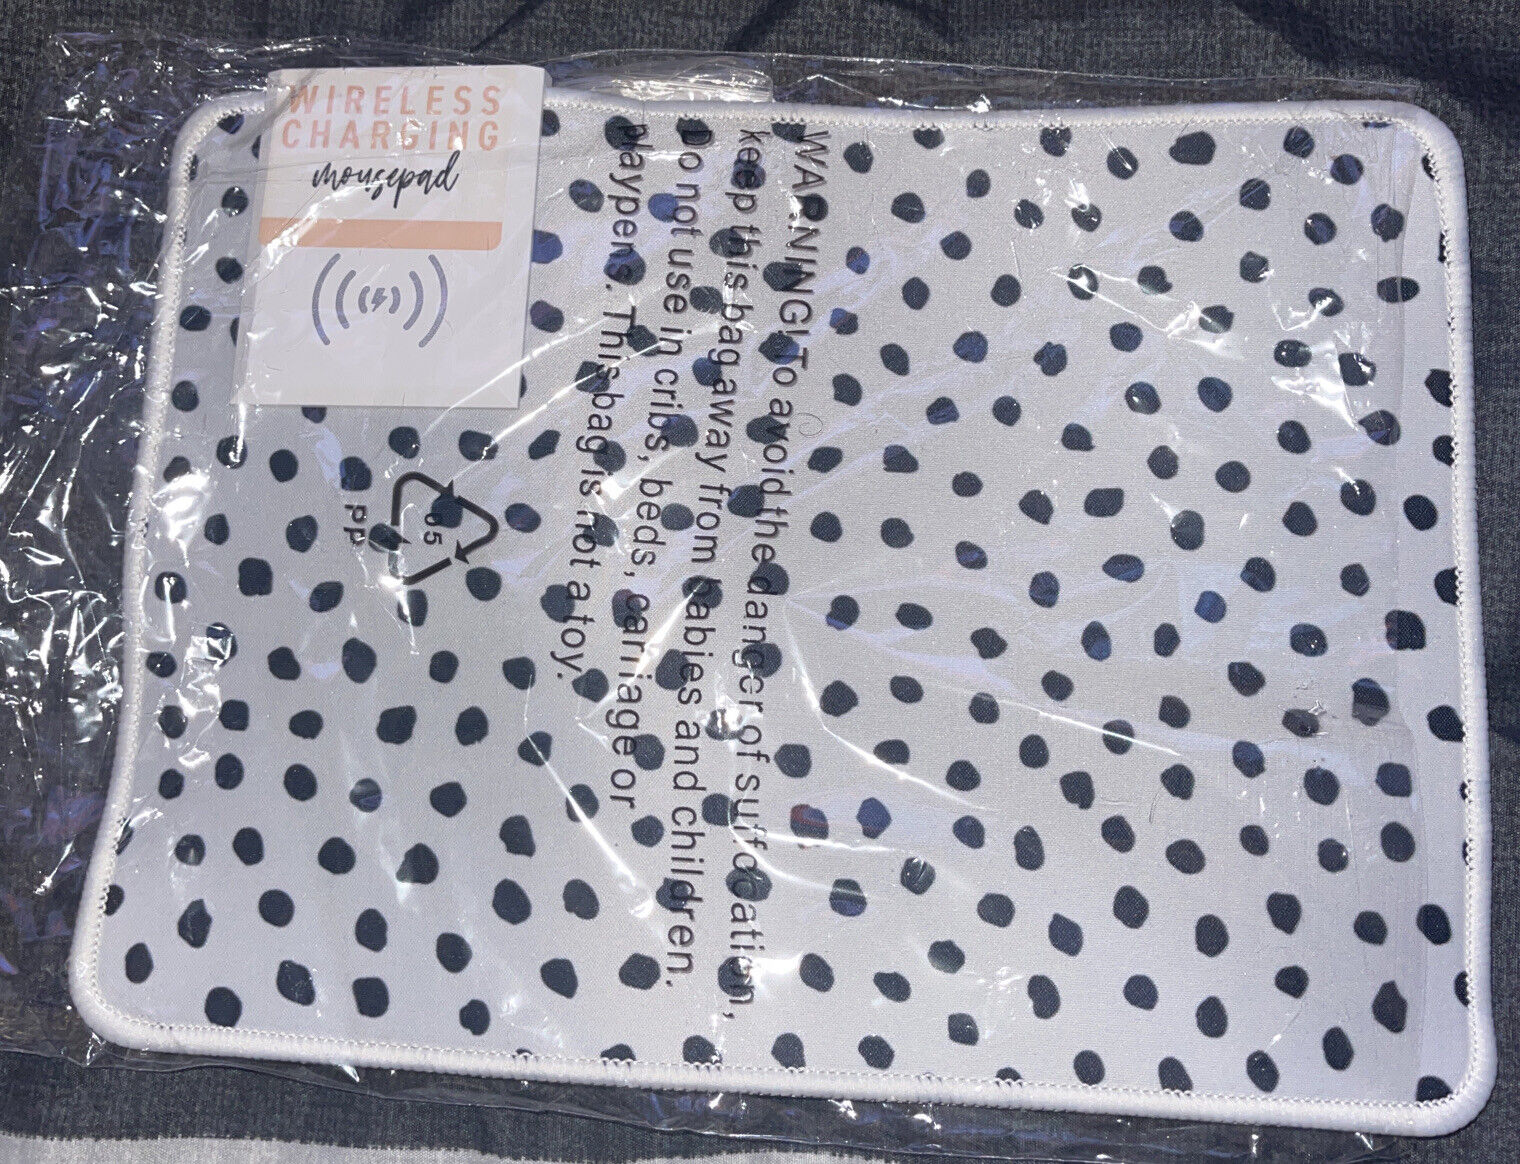 NEW - Wireless Charging Mousepad Black & White Spots Print Rectangular 11” X 8” 